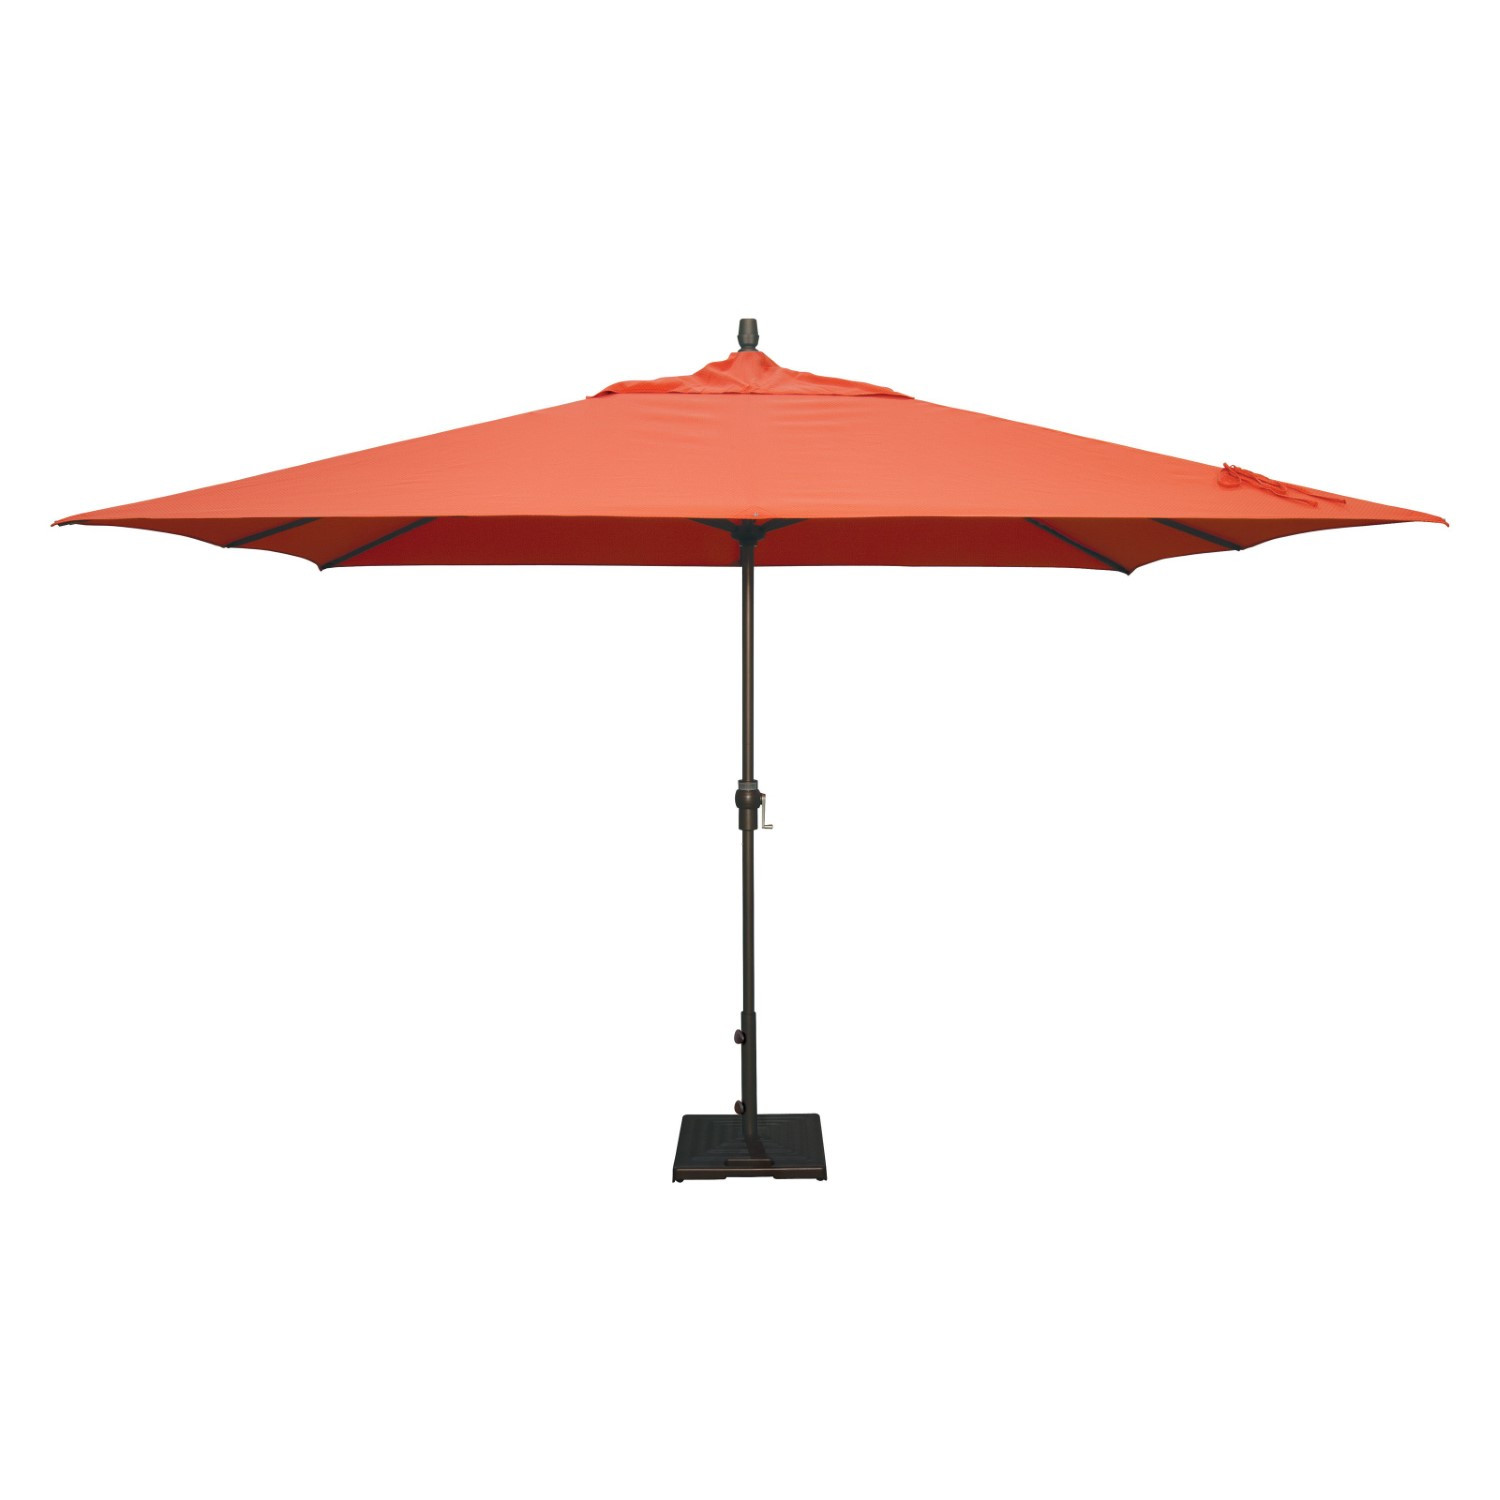 Best ideas about 11 Foot Patio Umbrella
. Save or Pin Treasure Garden 8 x 11 ft Sunbrella Aluminium Crank Patio Now.